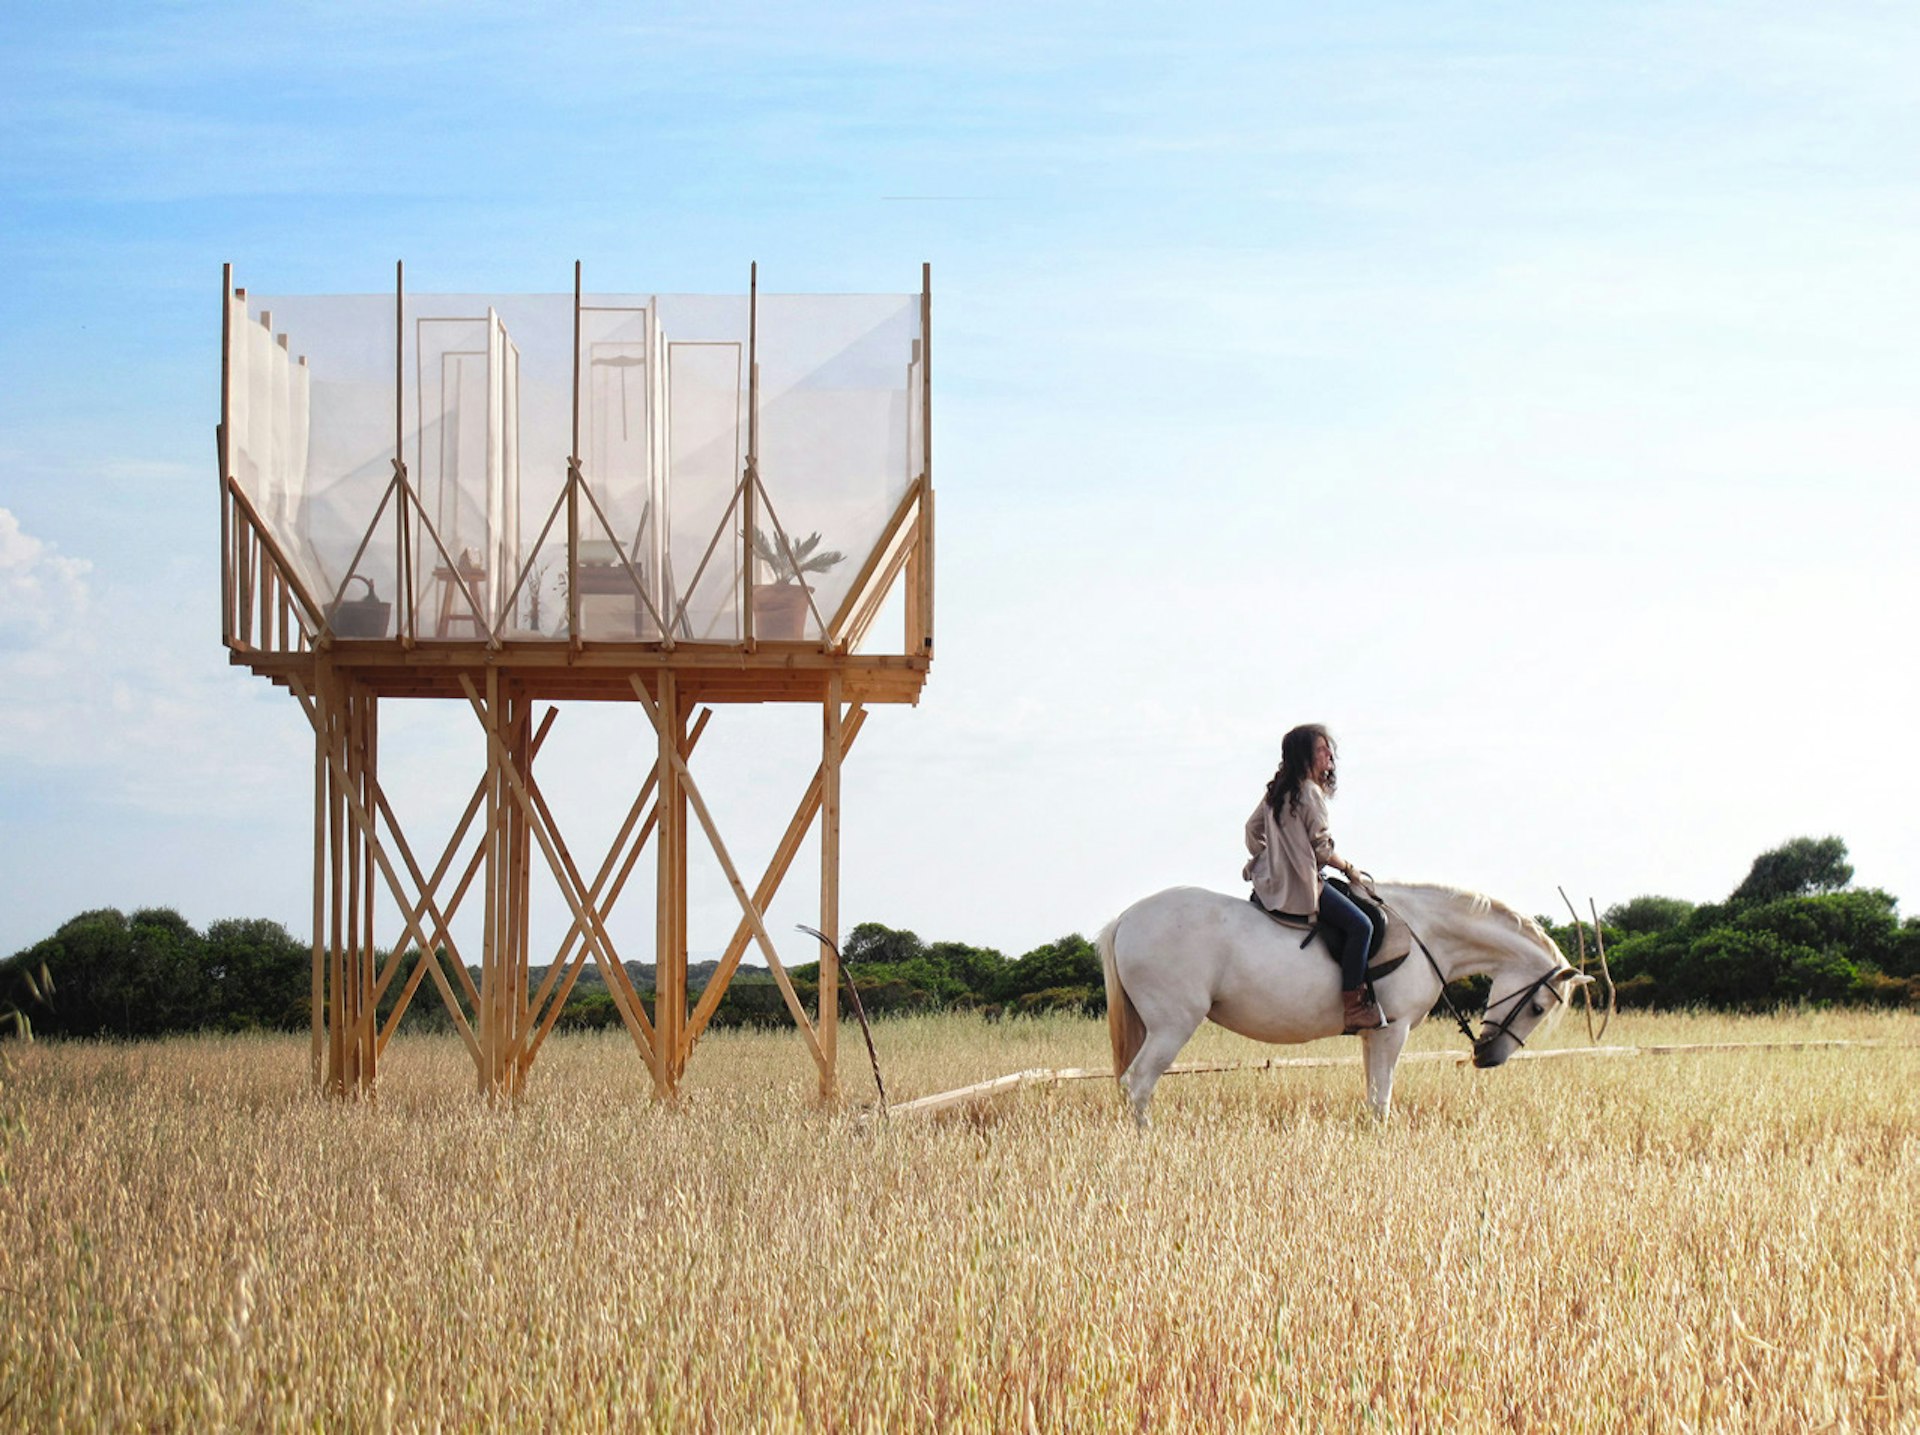 Gartnerfuglen Architects & Mariana De Delás, Photography by Gartnerfuglen Architects & Mariana De Delás, from The New Nomads, Copyright Gestalten 2015